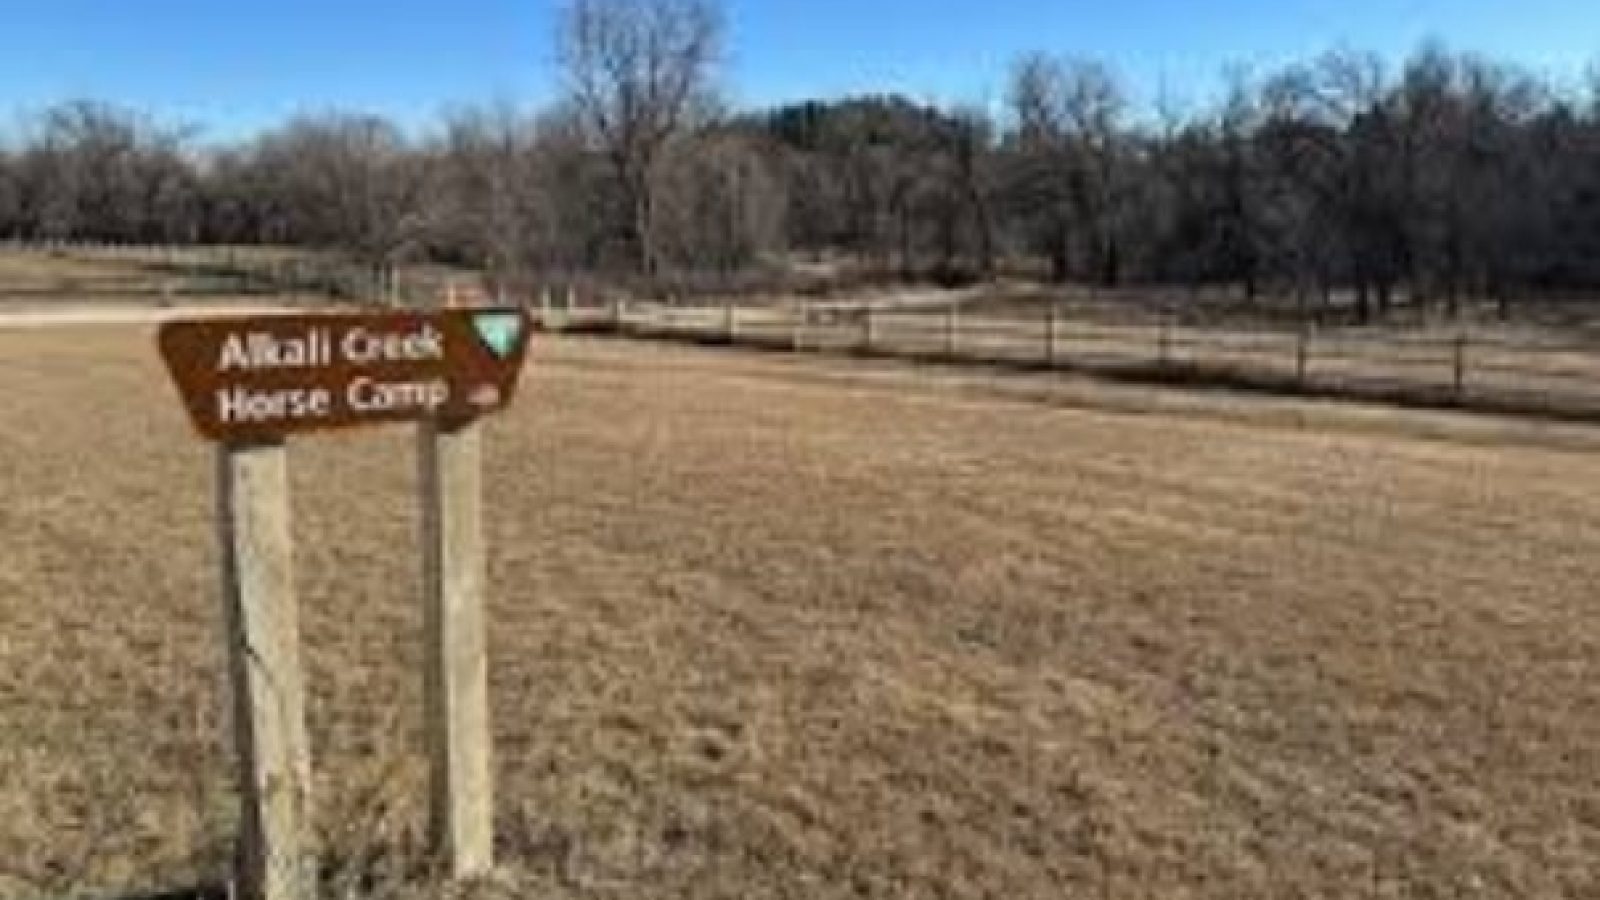 Alkali Creek Horse Camp Sign